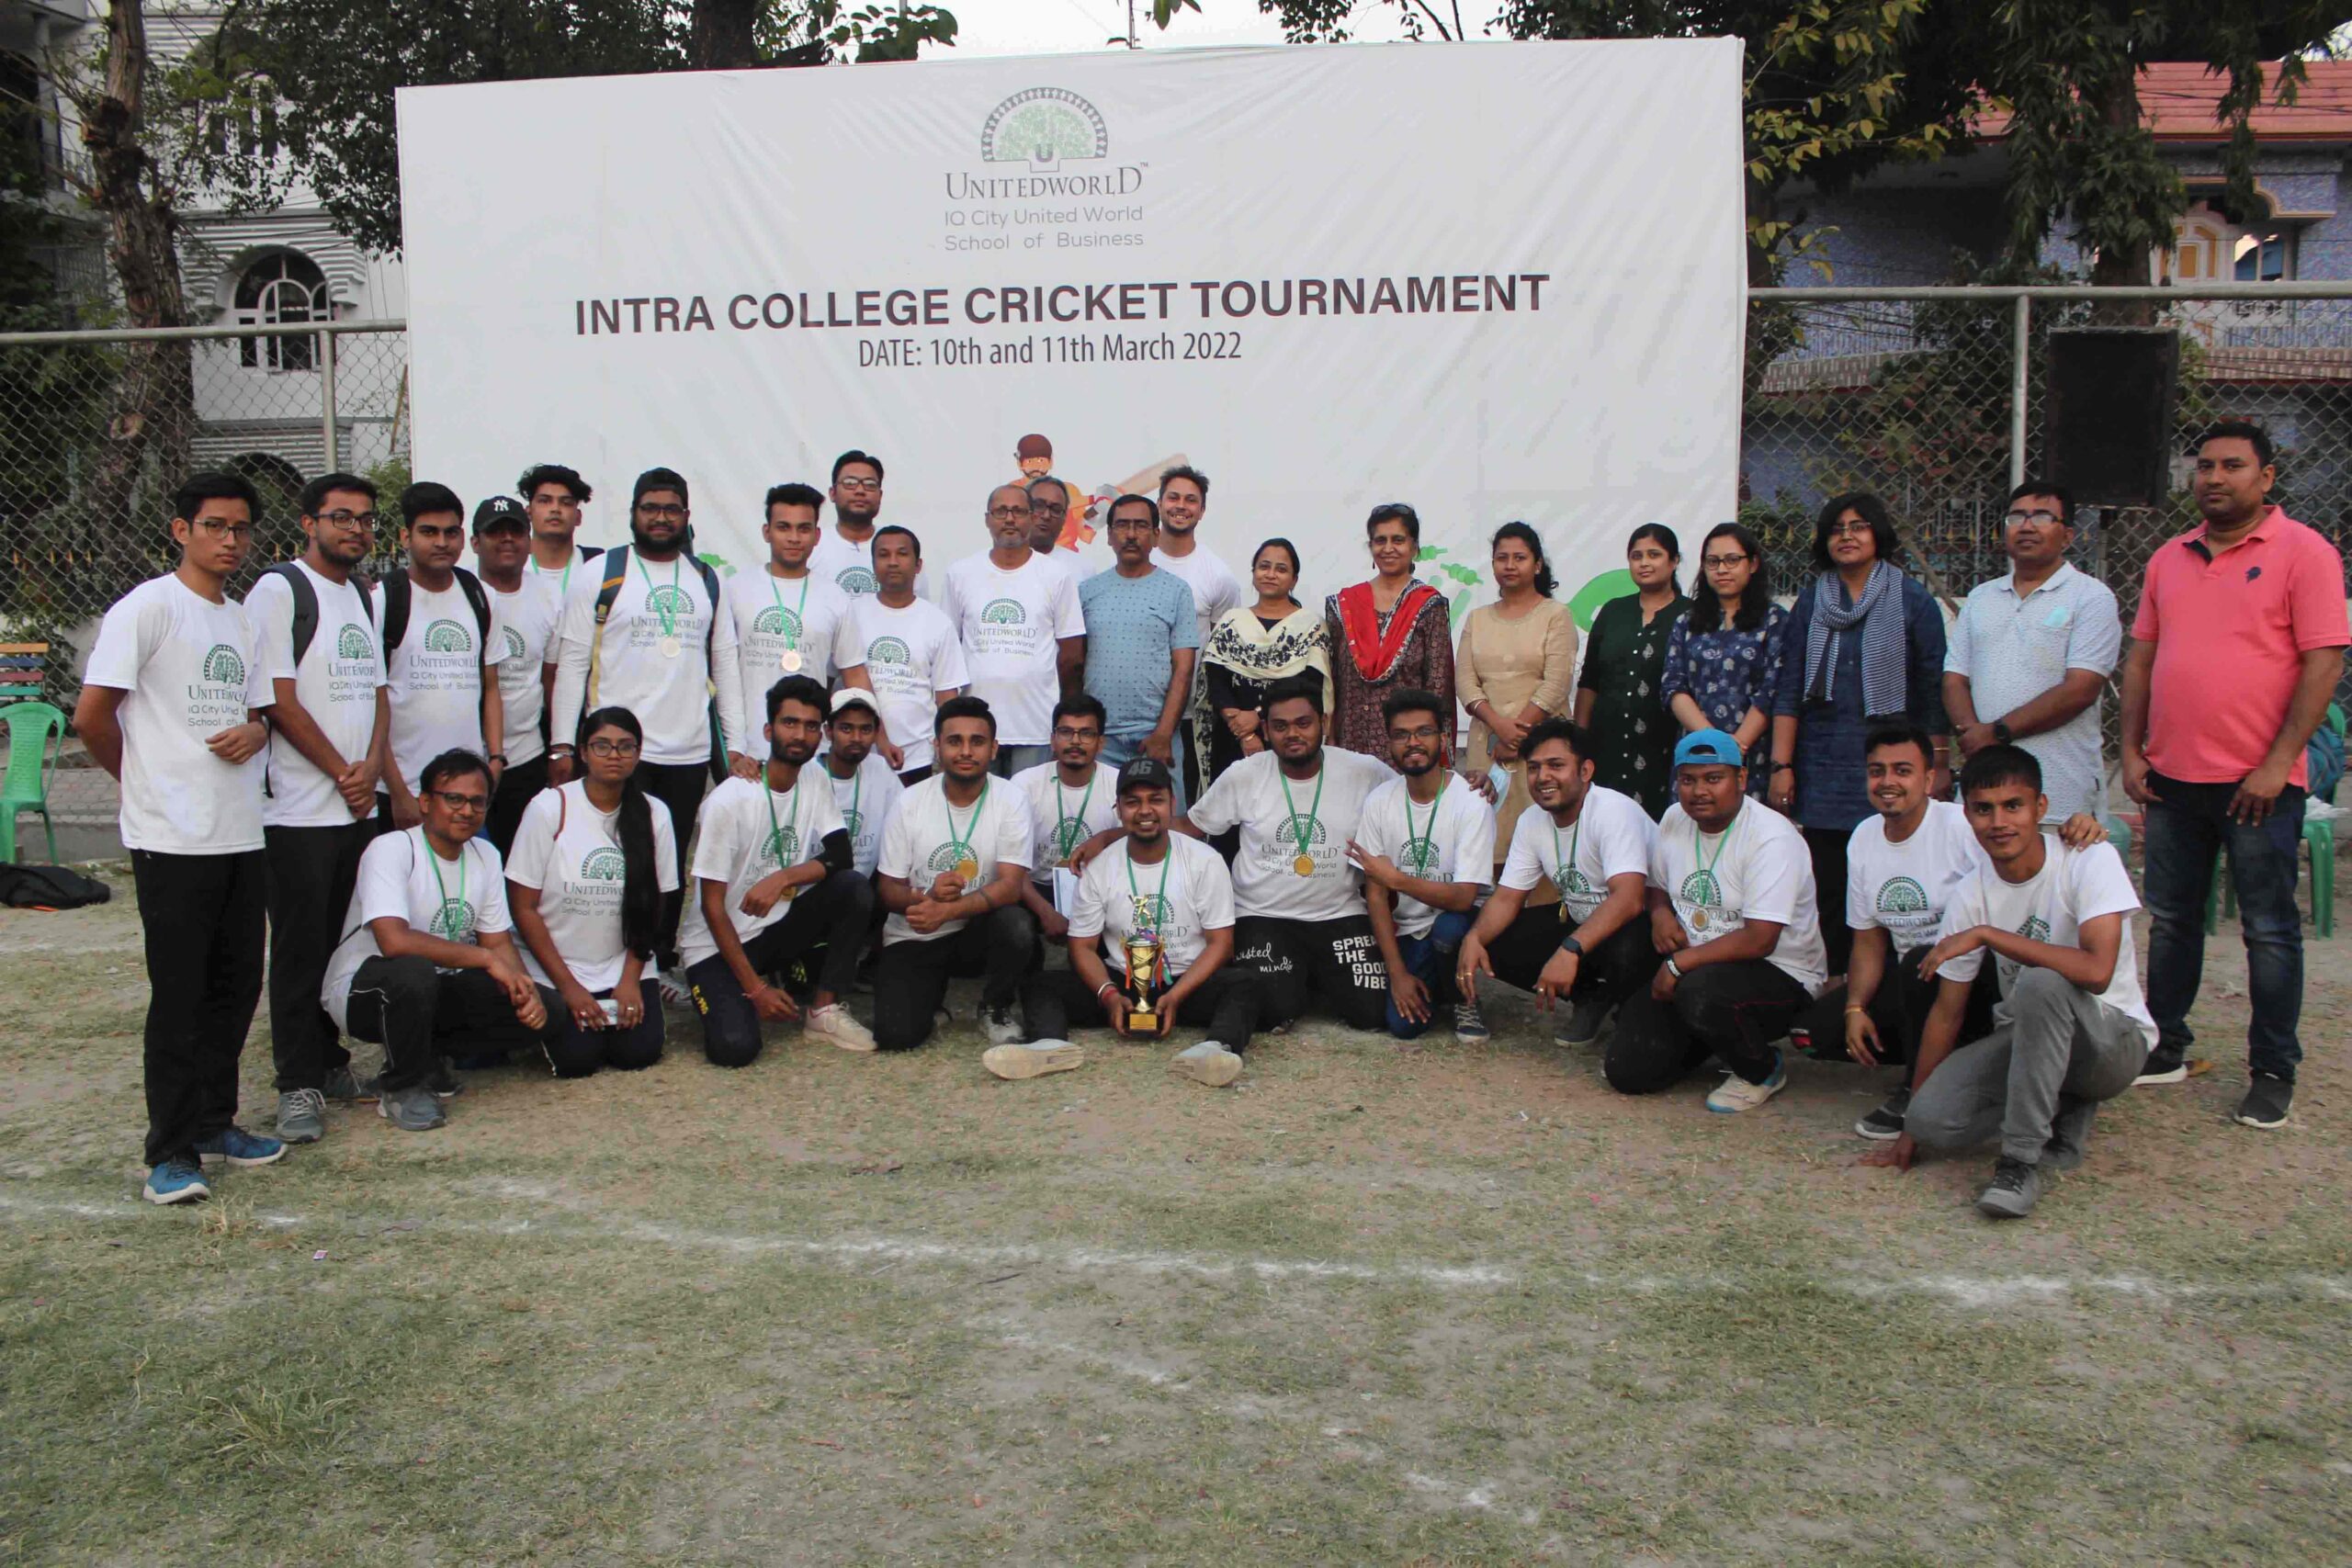 Winning team at Intra College Cricket Tournament 2022